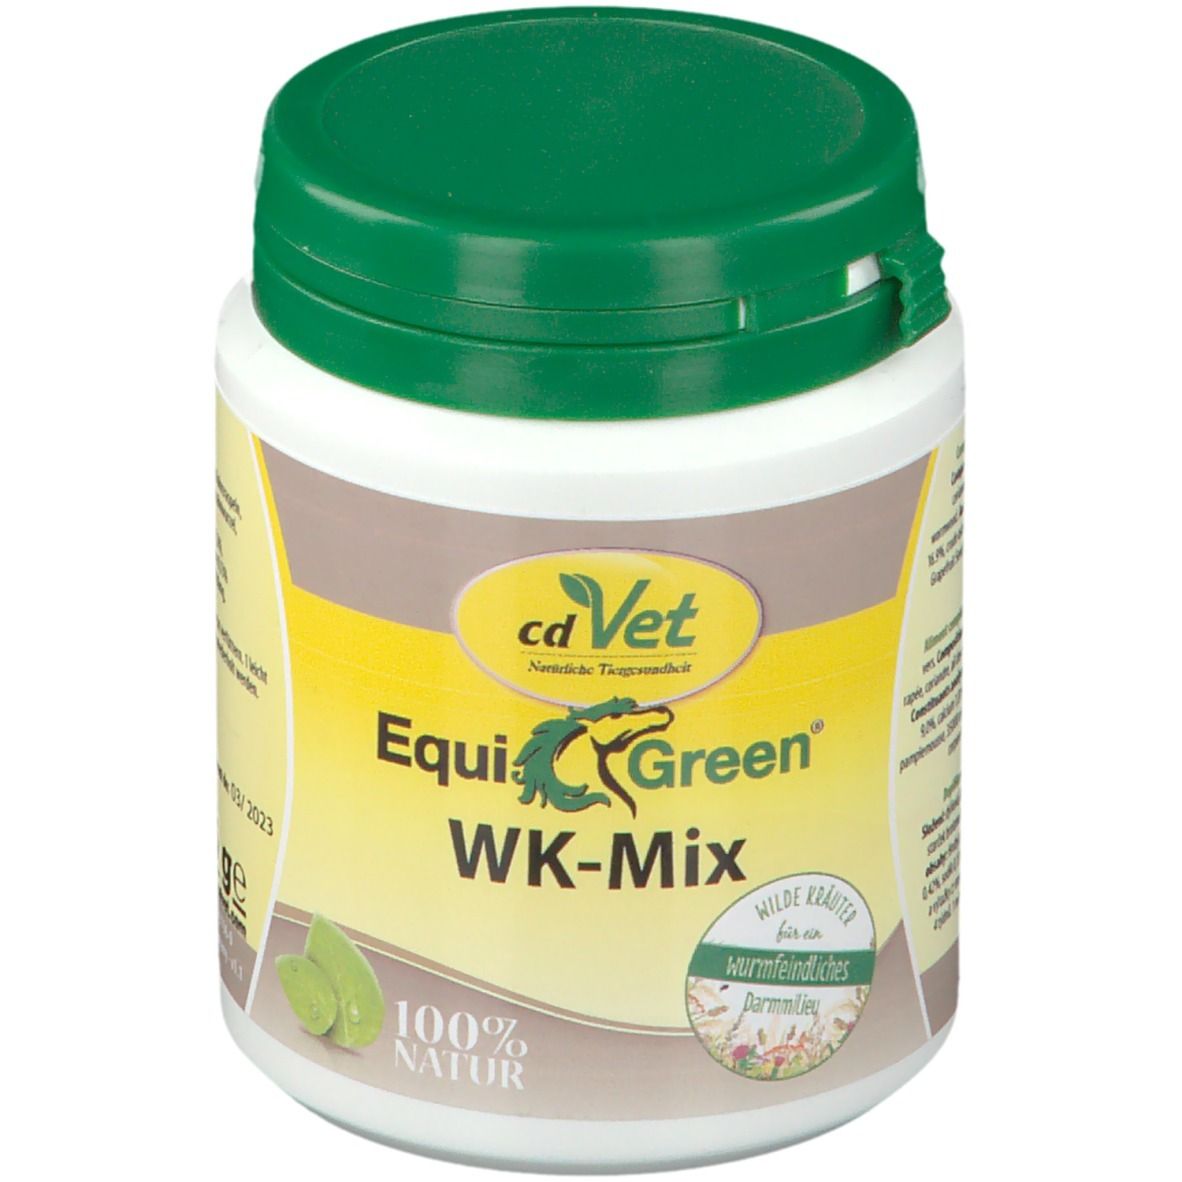 EquiGreen WK-Mix